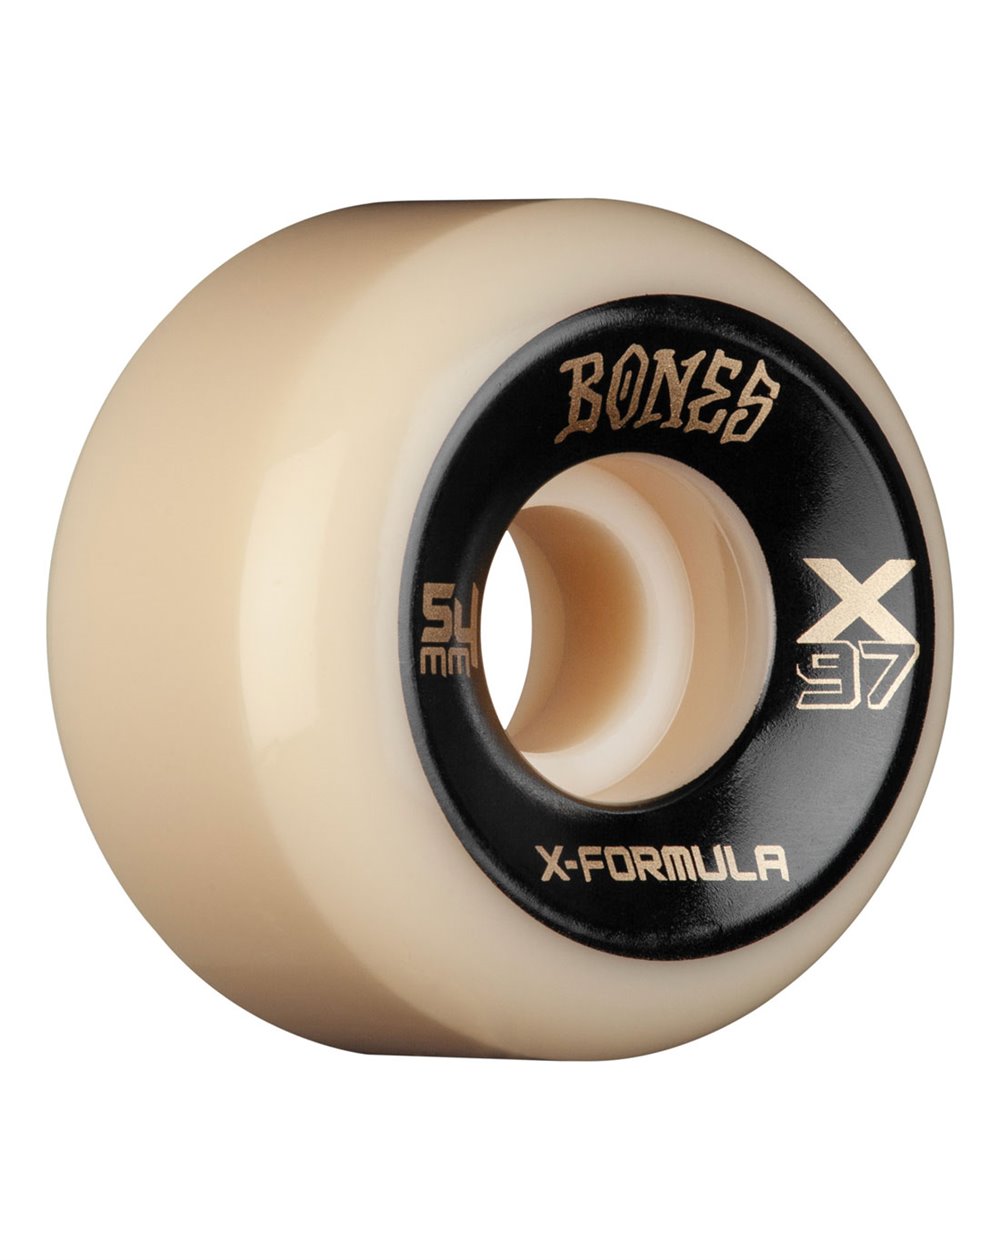 Bones Wheels Roues Skateboard X-Formula V6 Wide-Cut X-Ninety-Seven 54mm 97A 4 pc